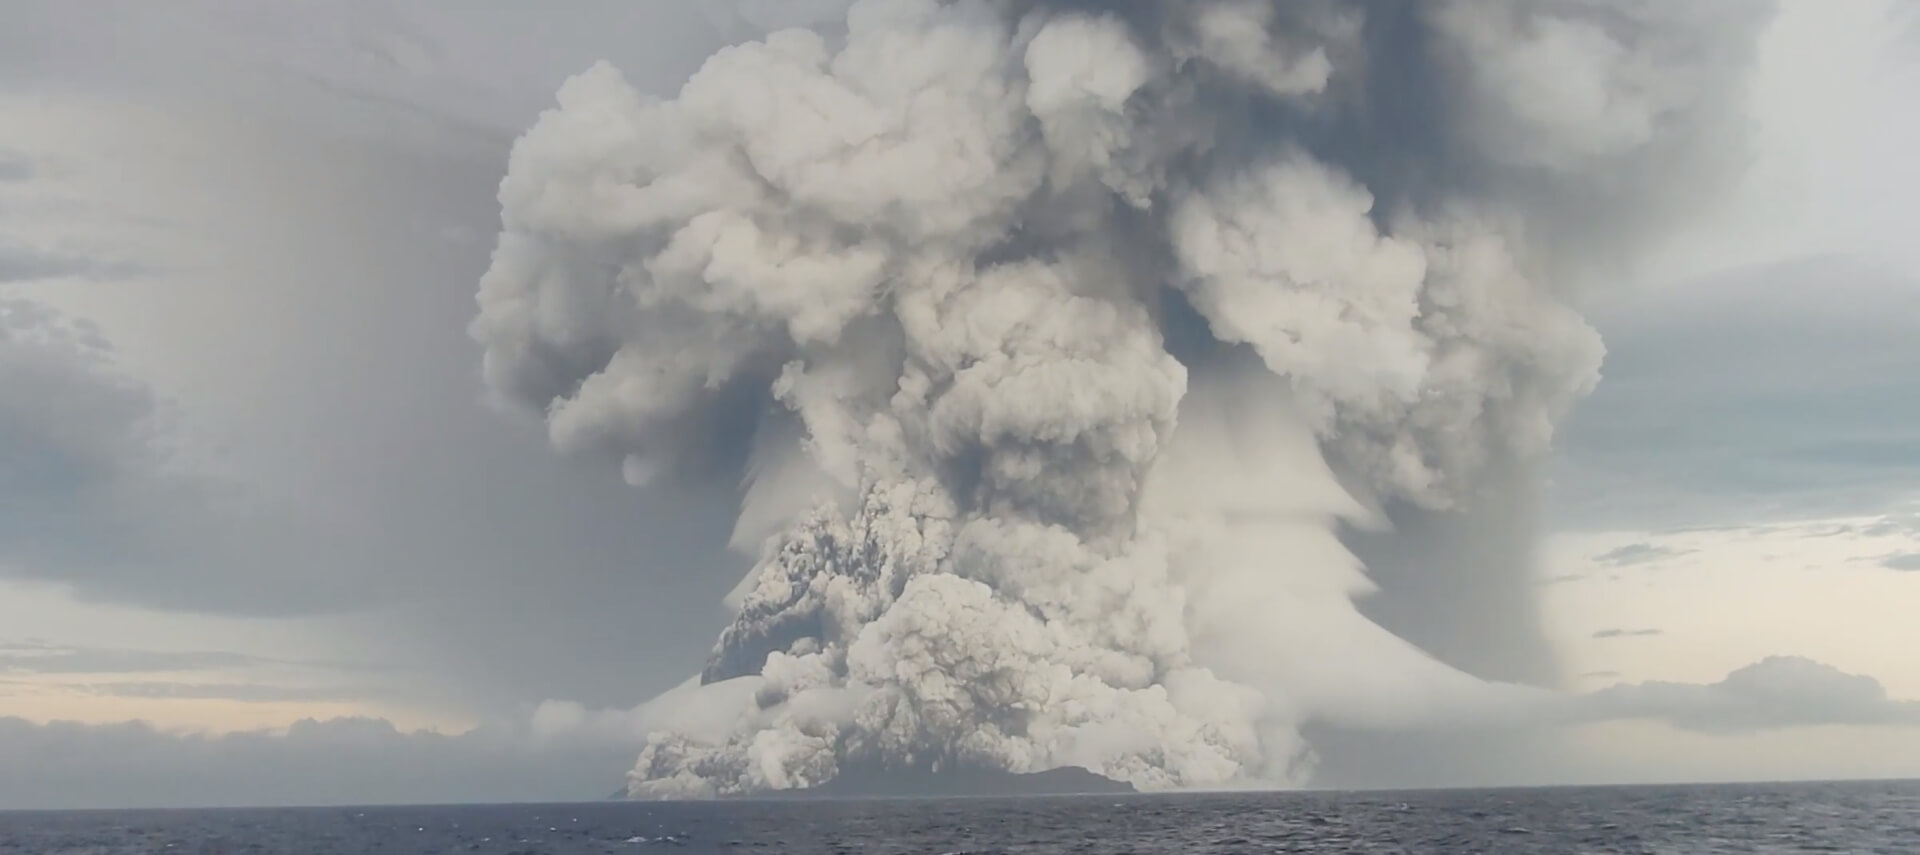 Australia, New Zealand Send Surveillance Flights After Volcanic Ash Covers Tonga